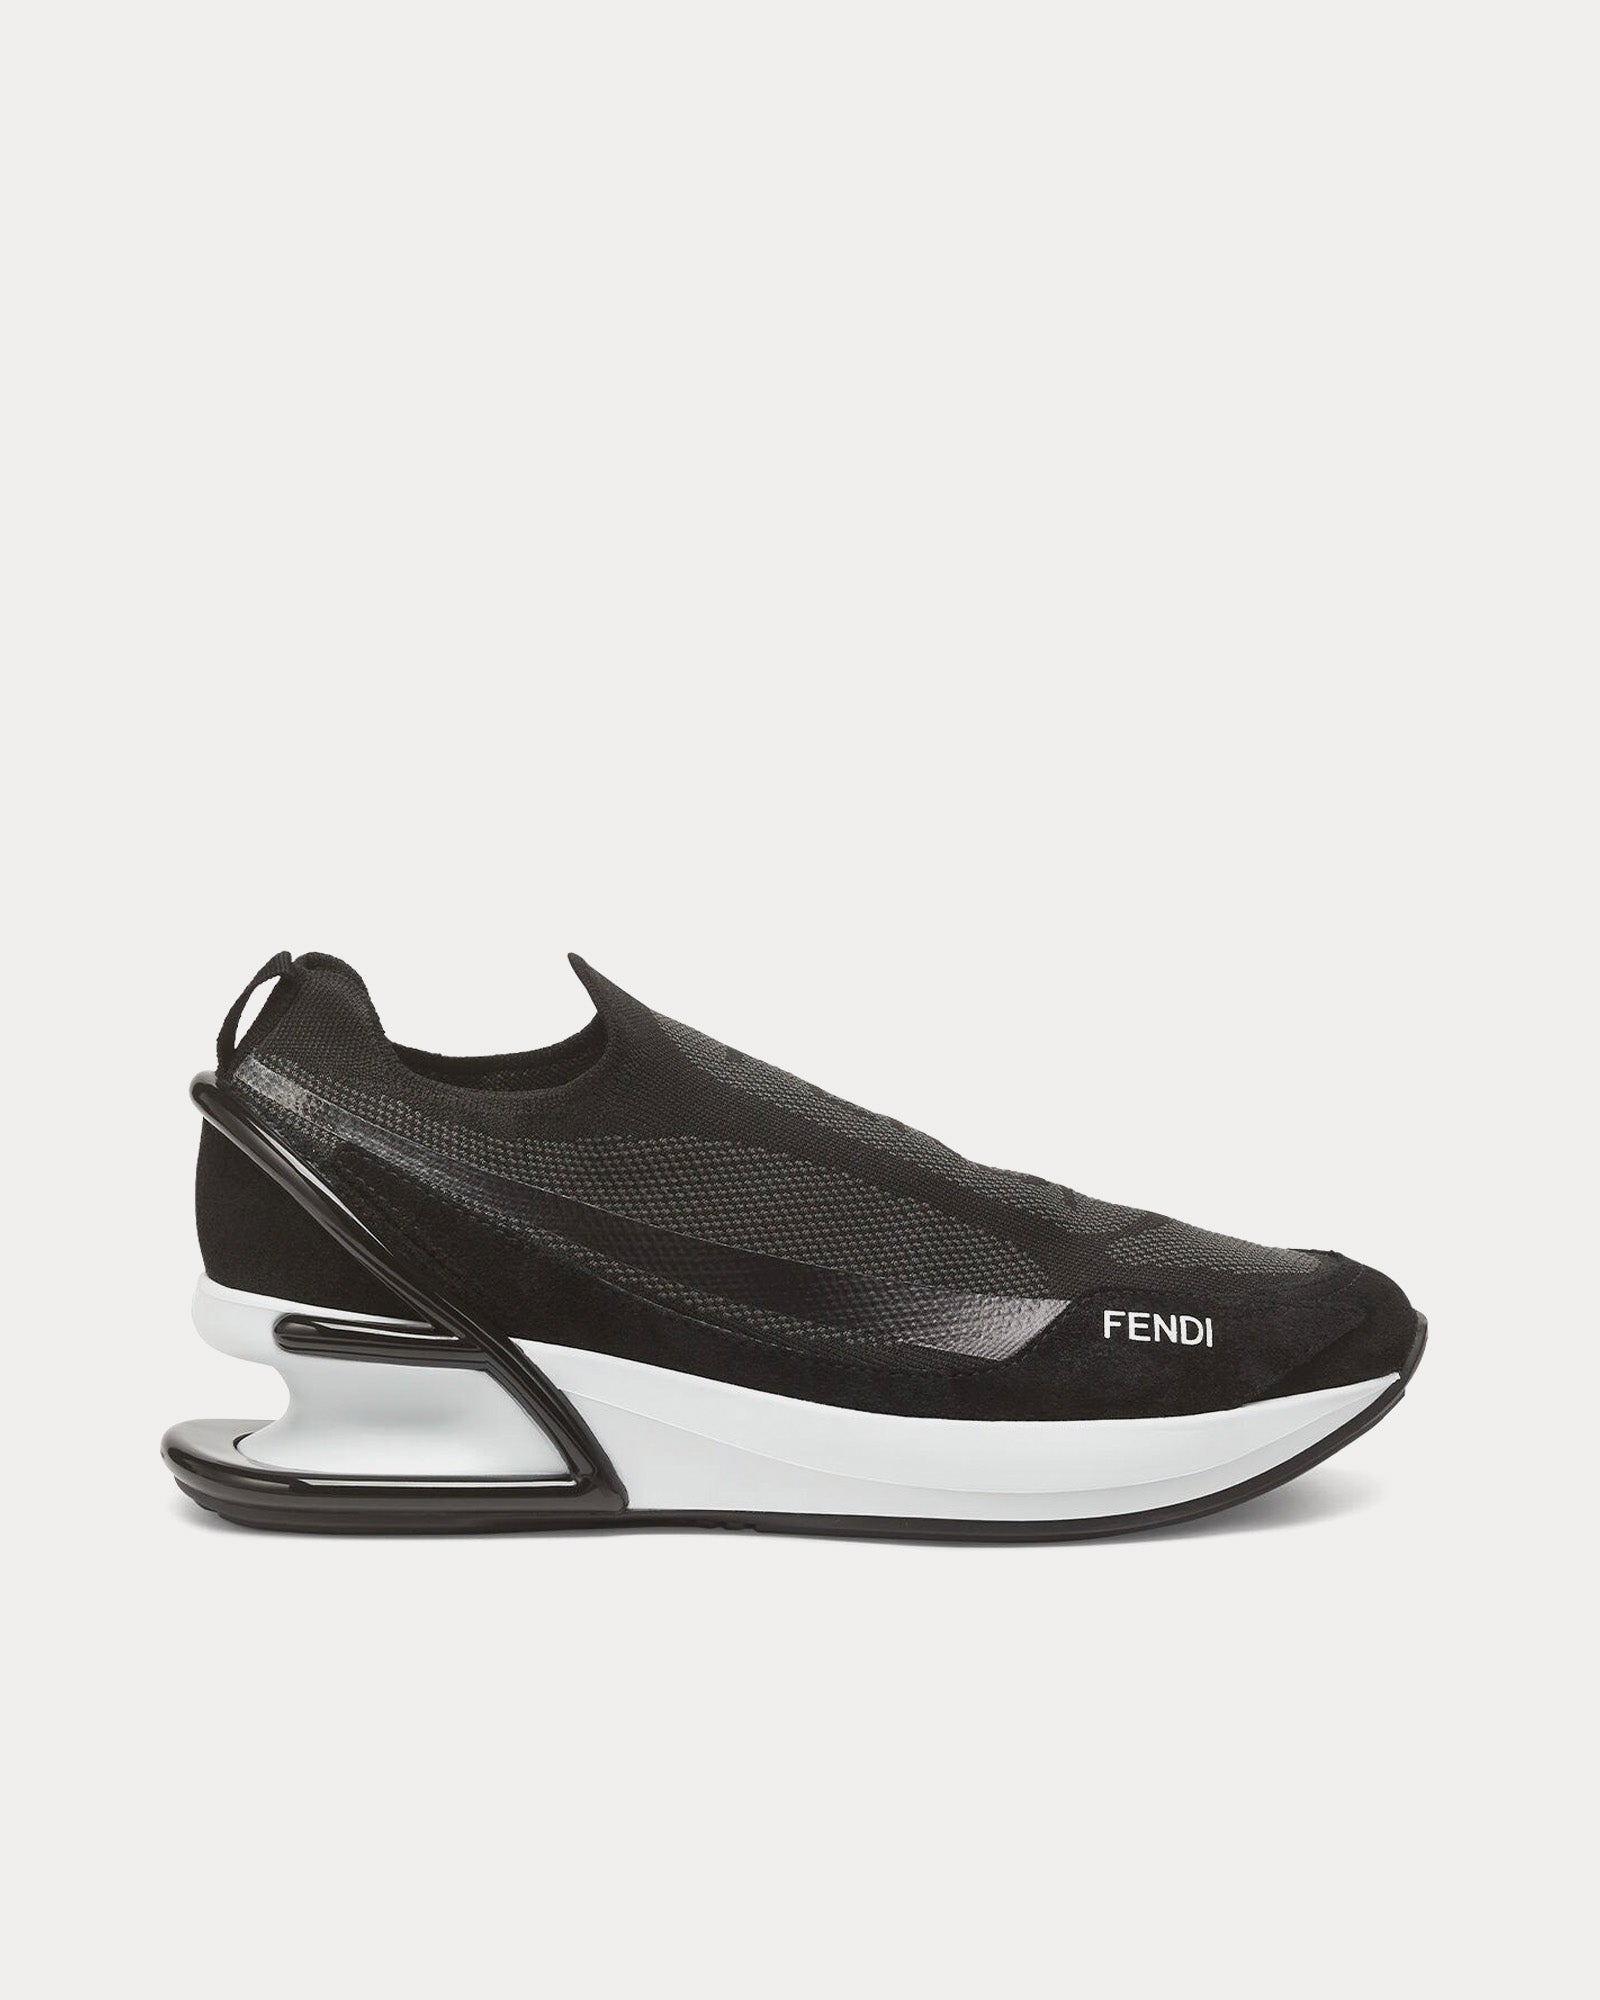 Fendi - First 1 Fabric Black Slip On Sneakers